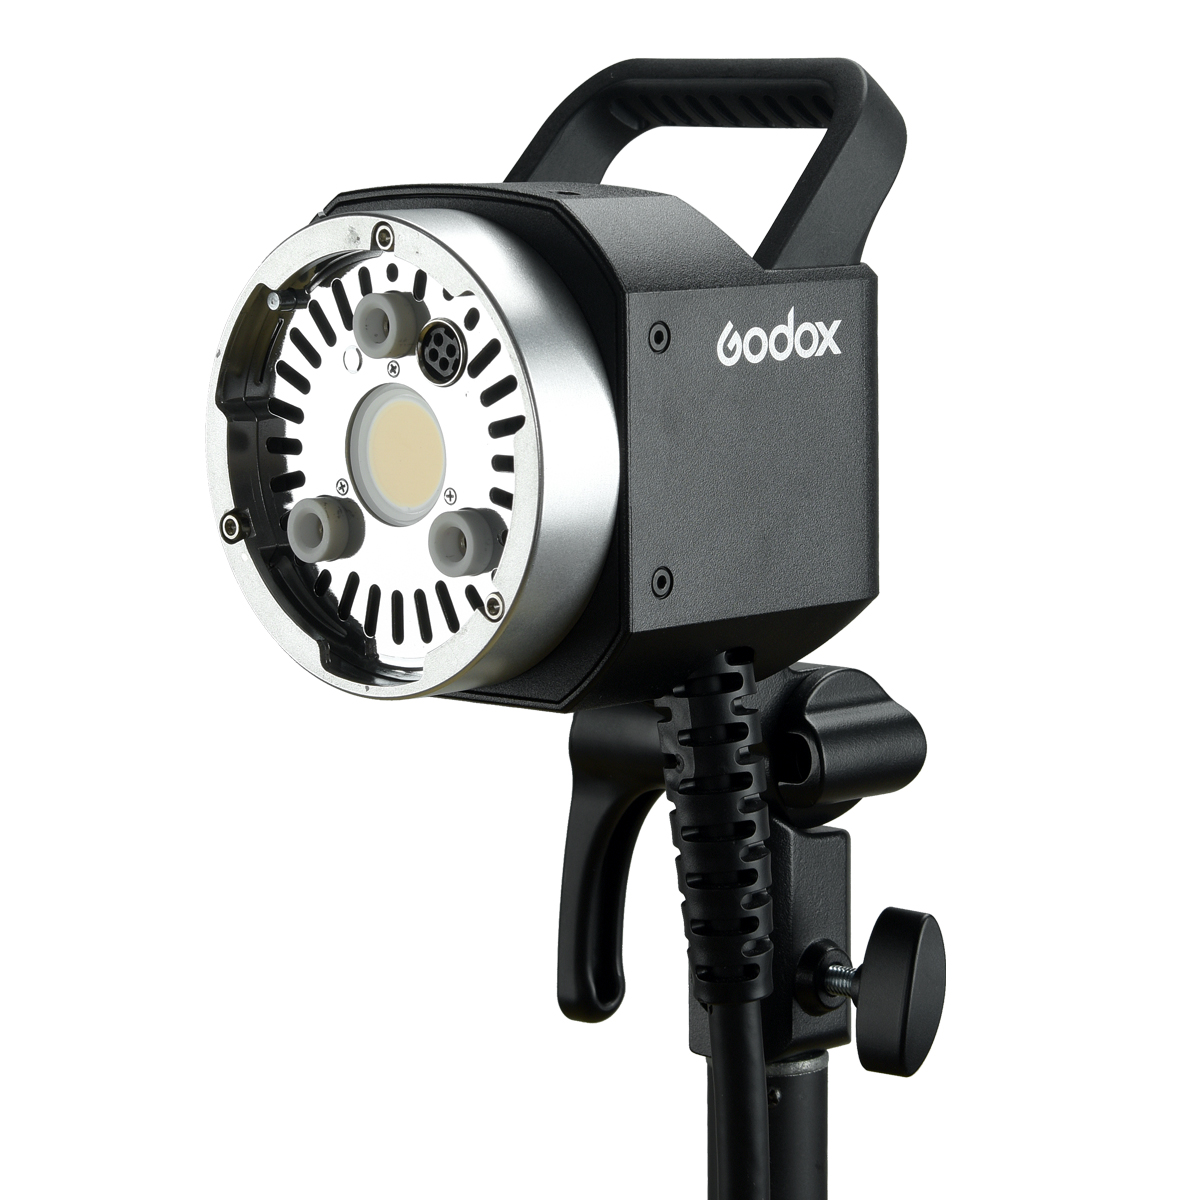    Godox H400P   AD400Pro   Ultra-mart